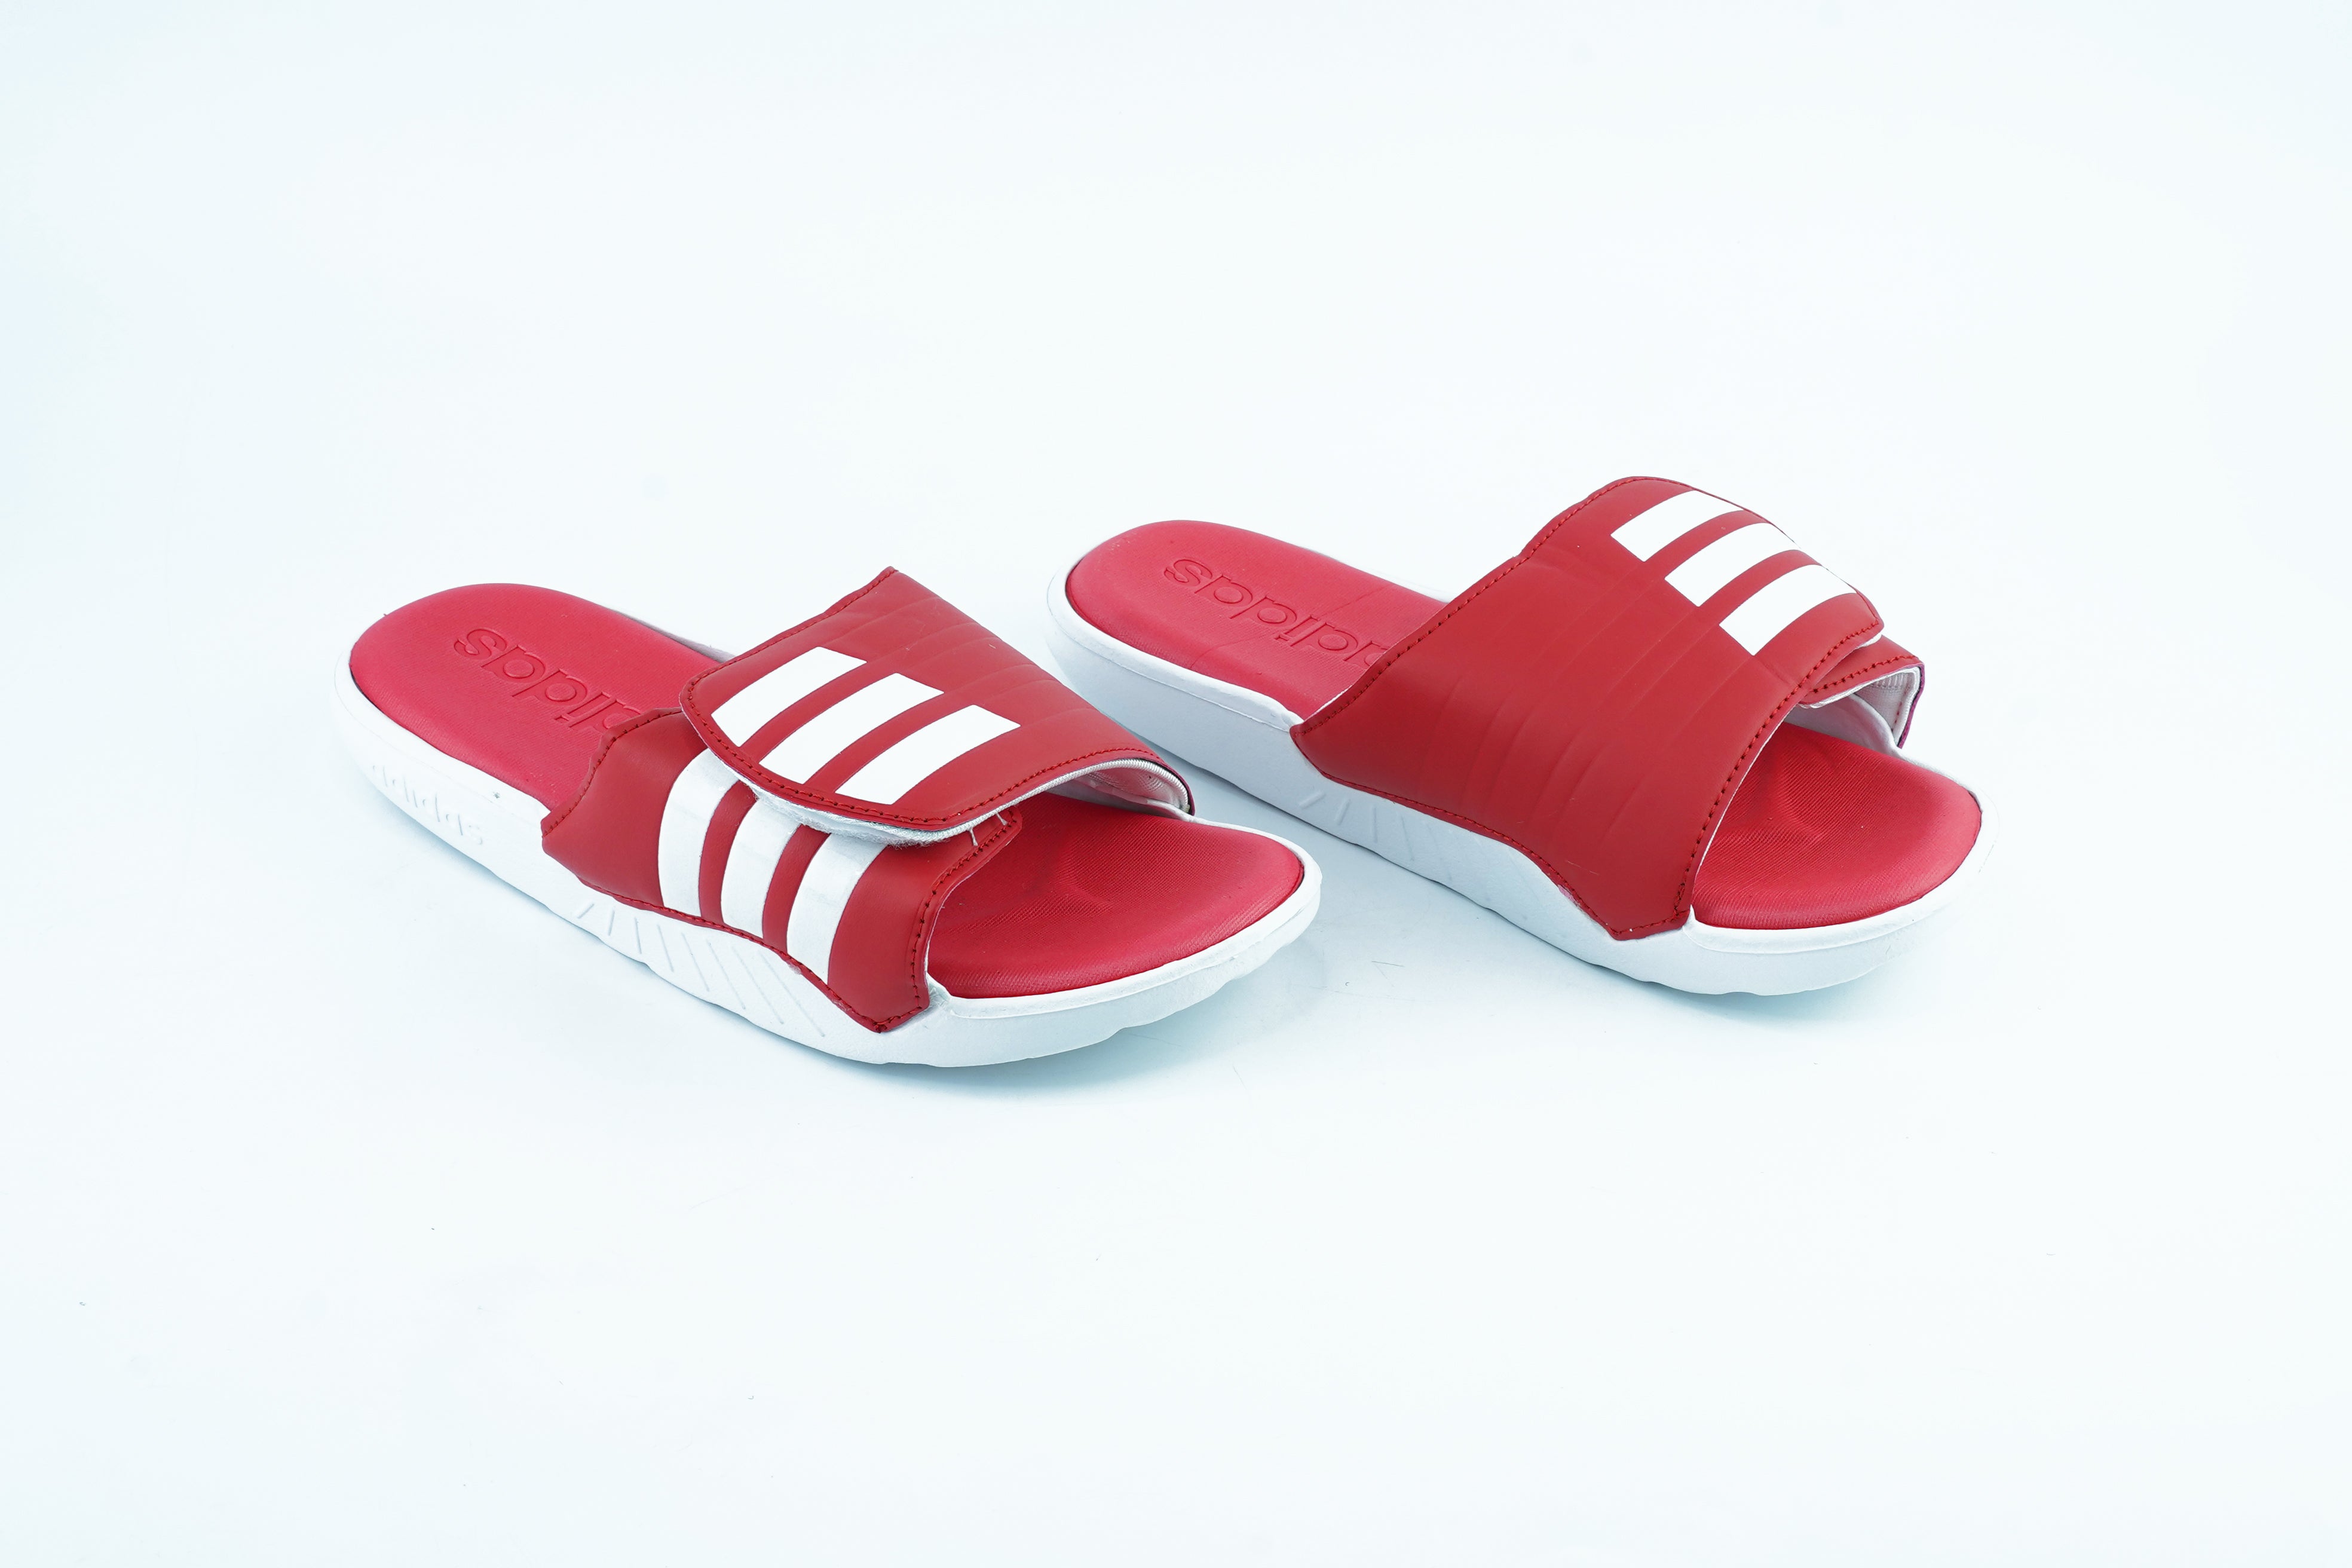 Adidas Slippers, Flip Flops & Slides | Upto 50% off | Myntra